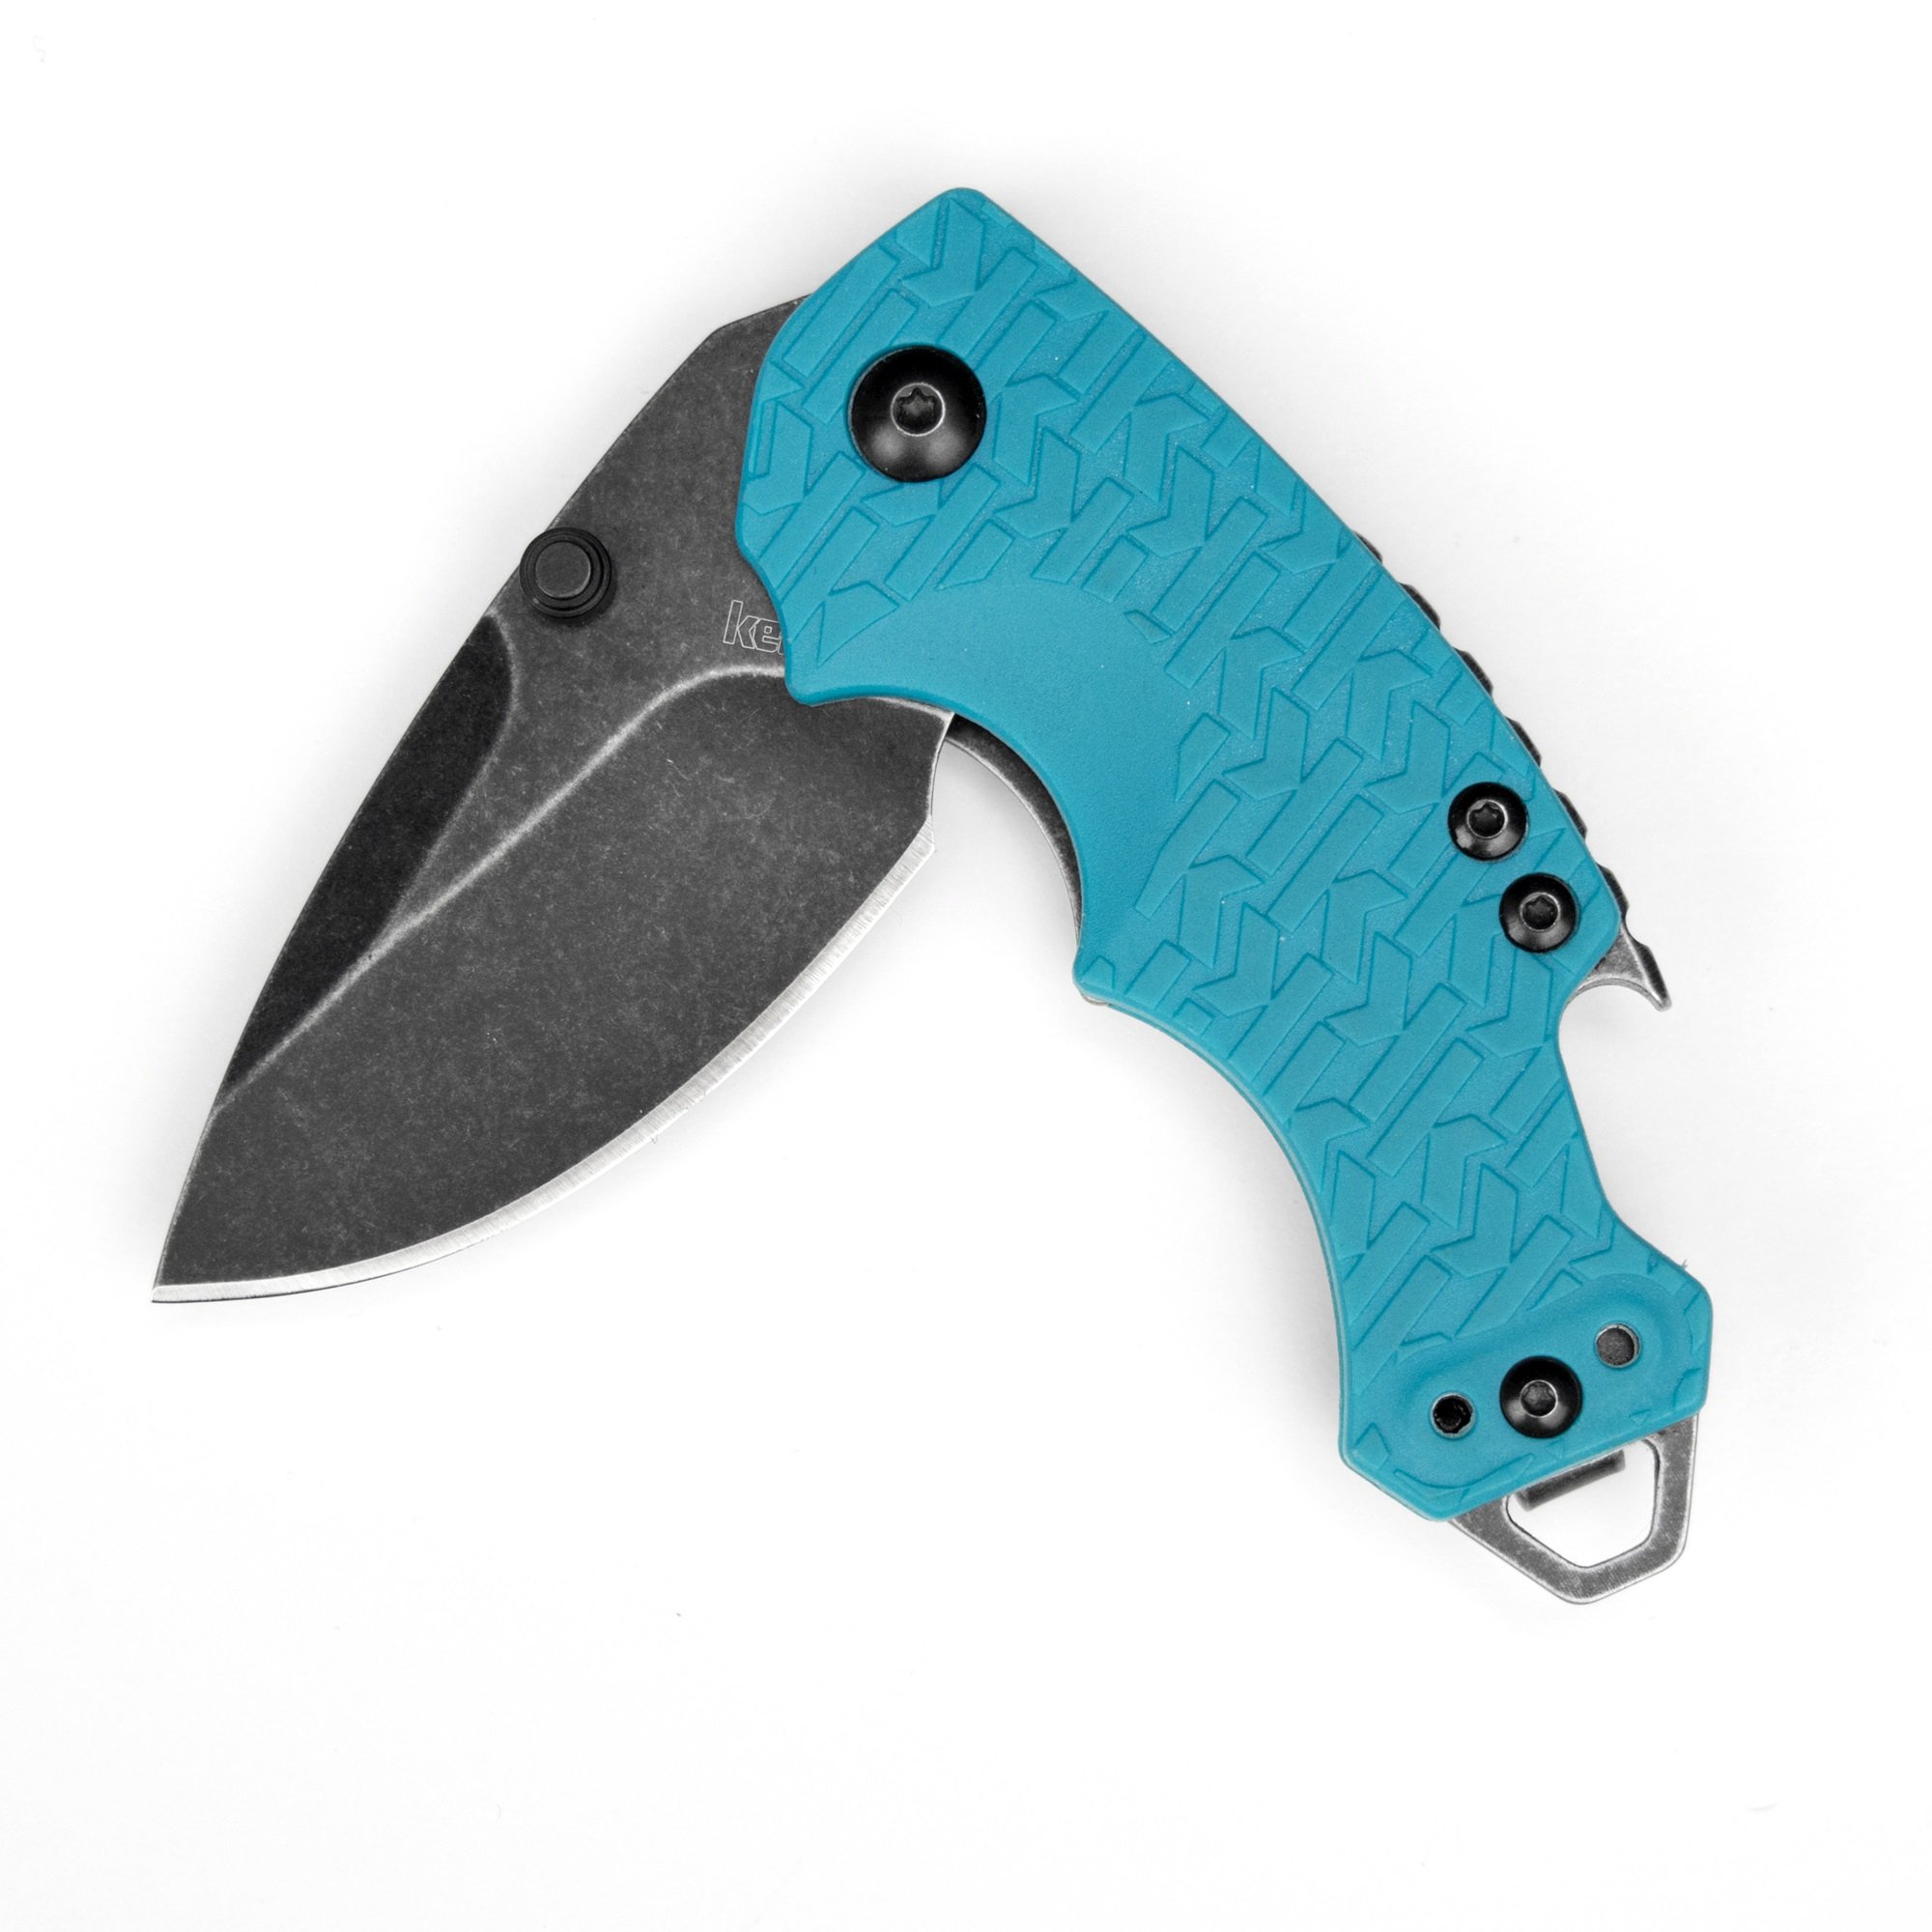 Kershaw Shuffle Folding Pocket Knife (Teal) $12.99 + FS for Prime on Amazon